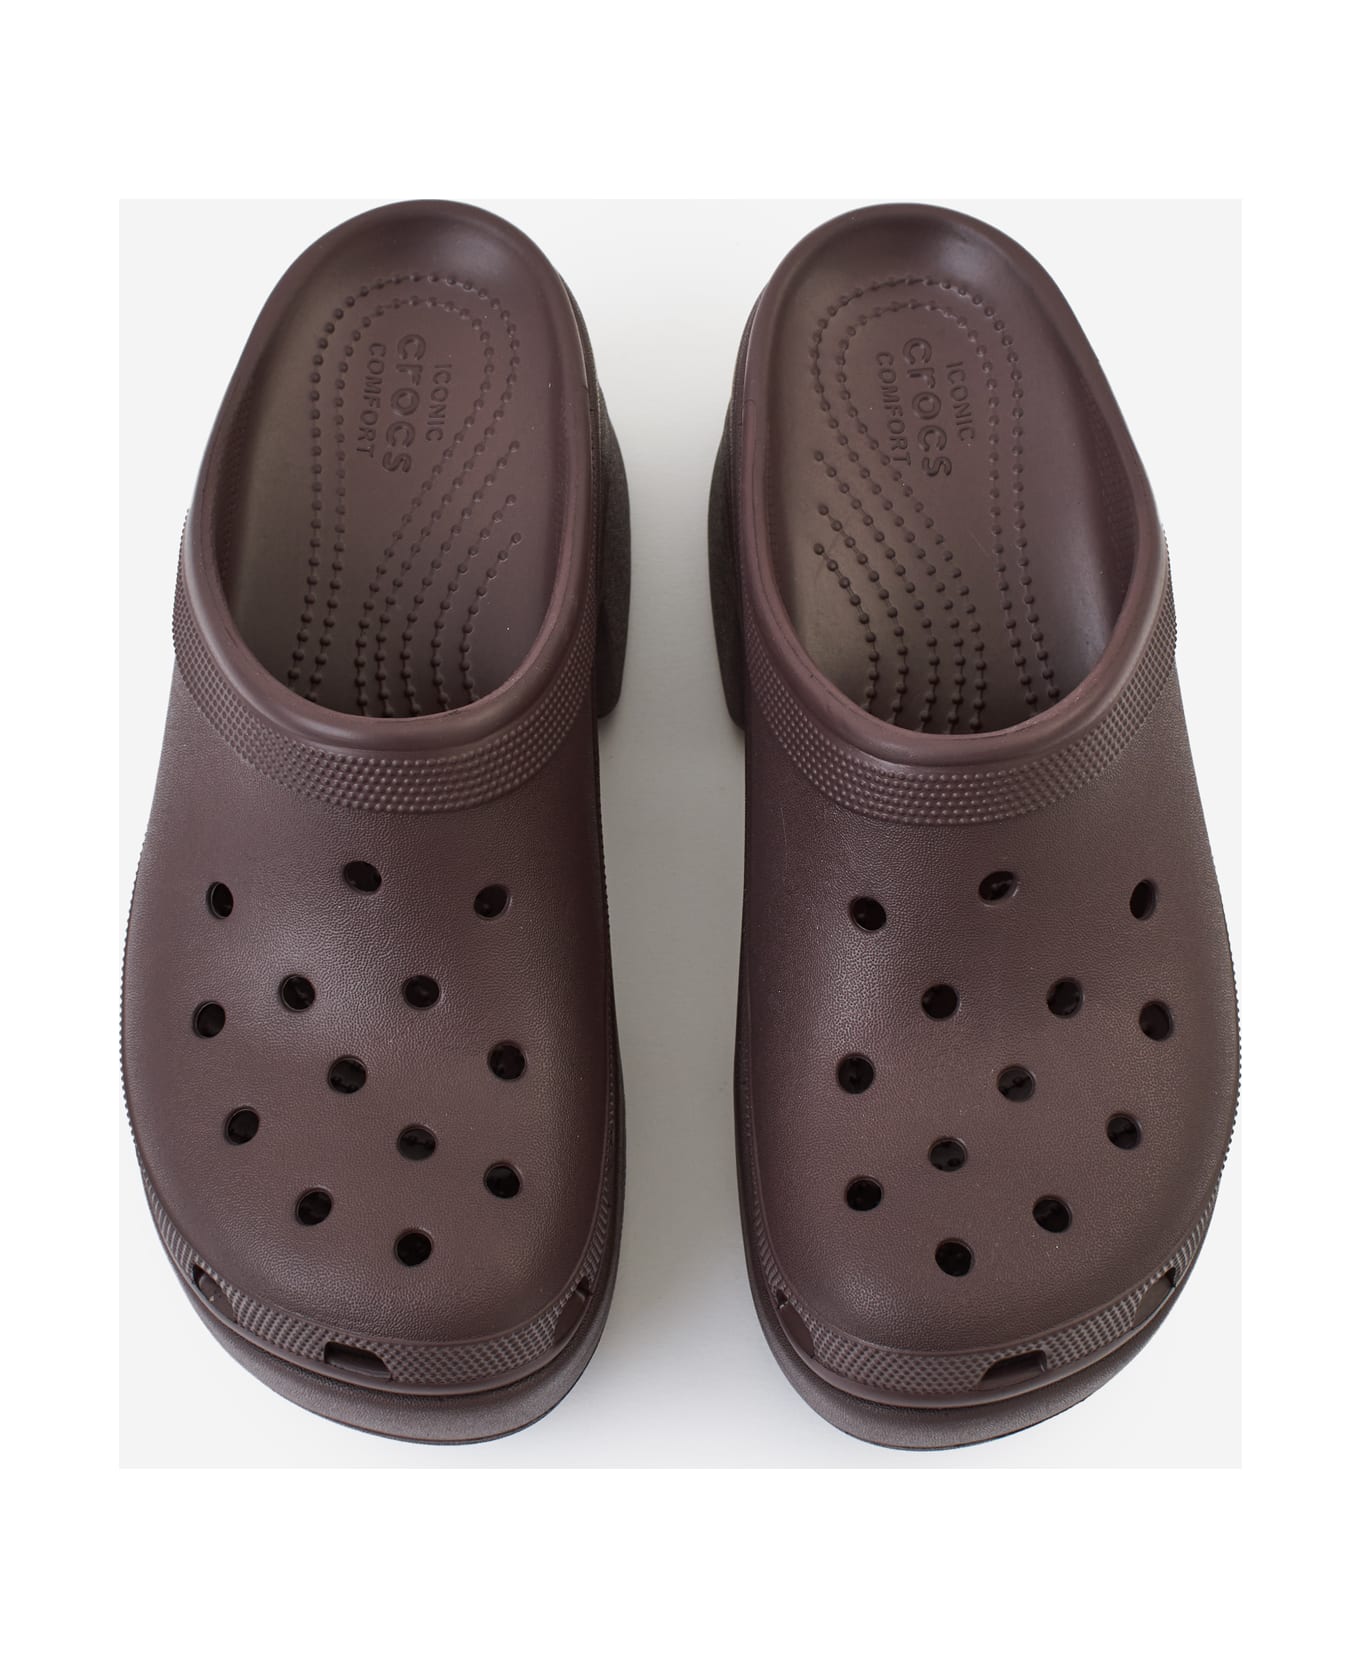 Crocs Siren Clog Sandals - Mocha サンダル